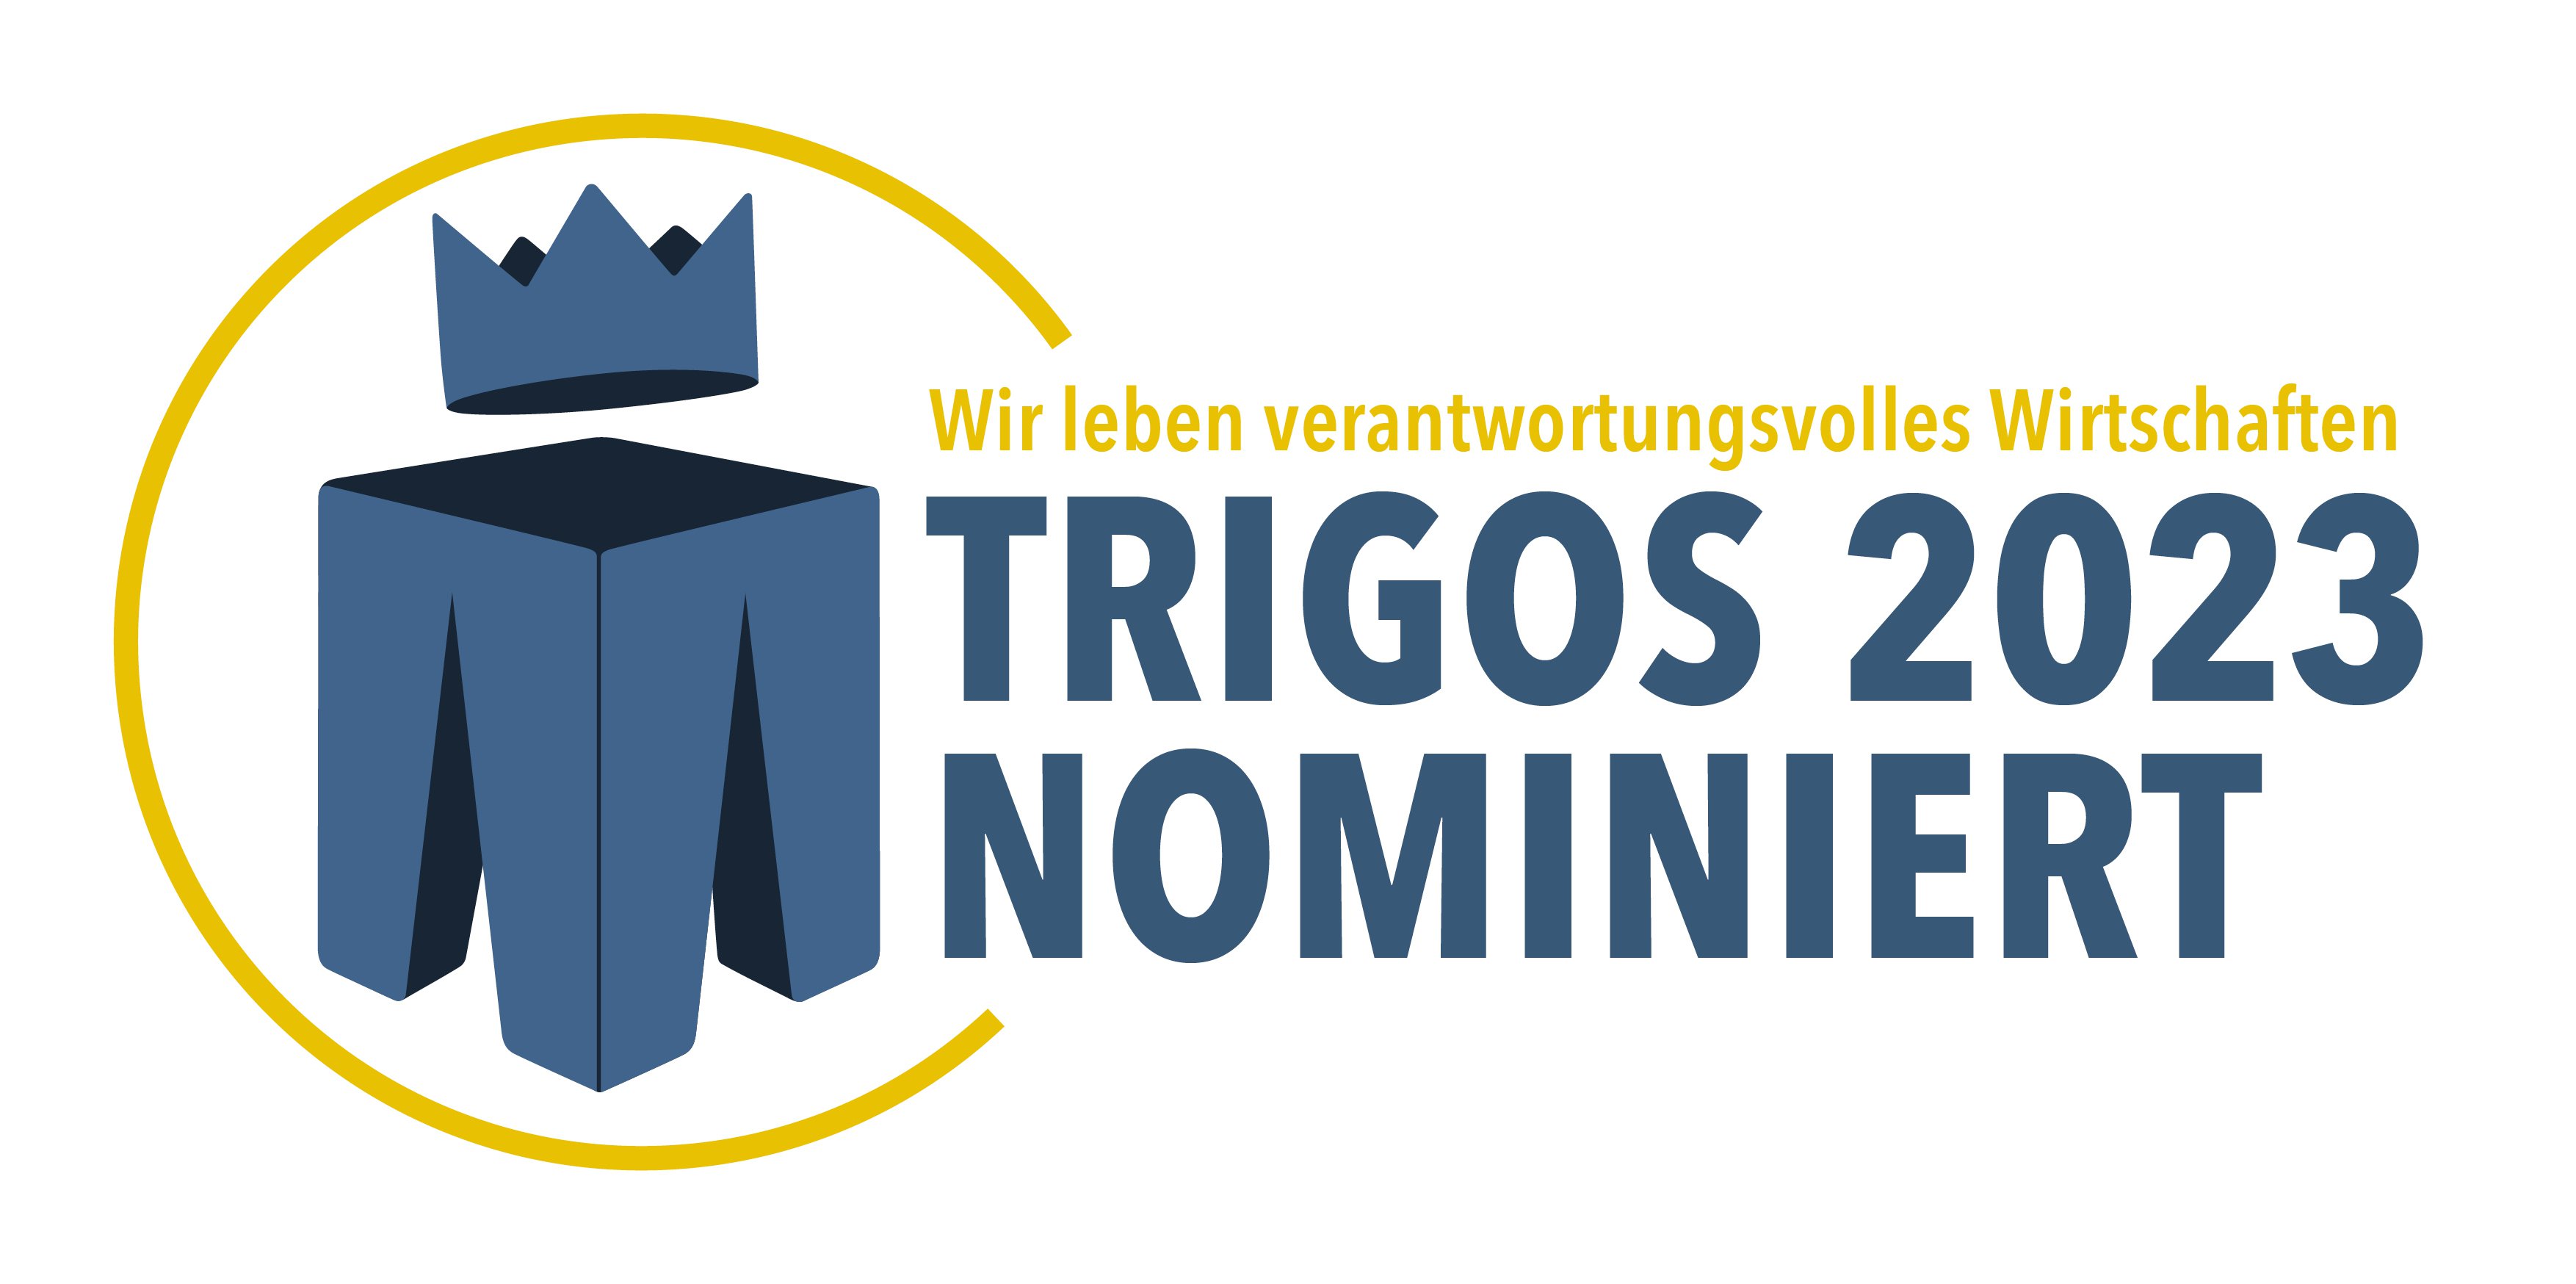 TRIGOS2023-Label-Nominiert-MitClaim.jpg